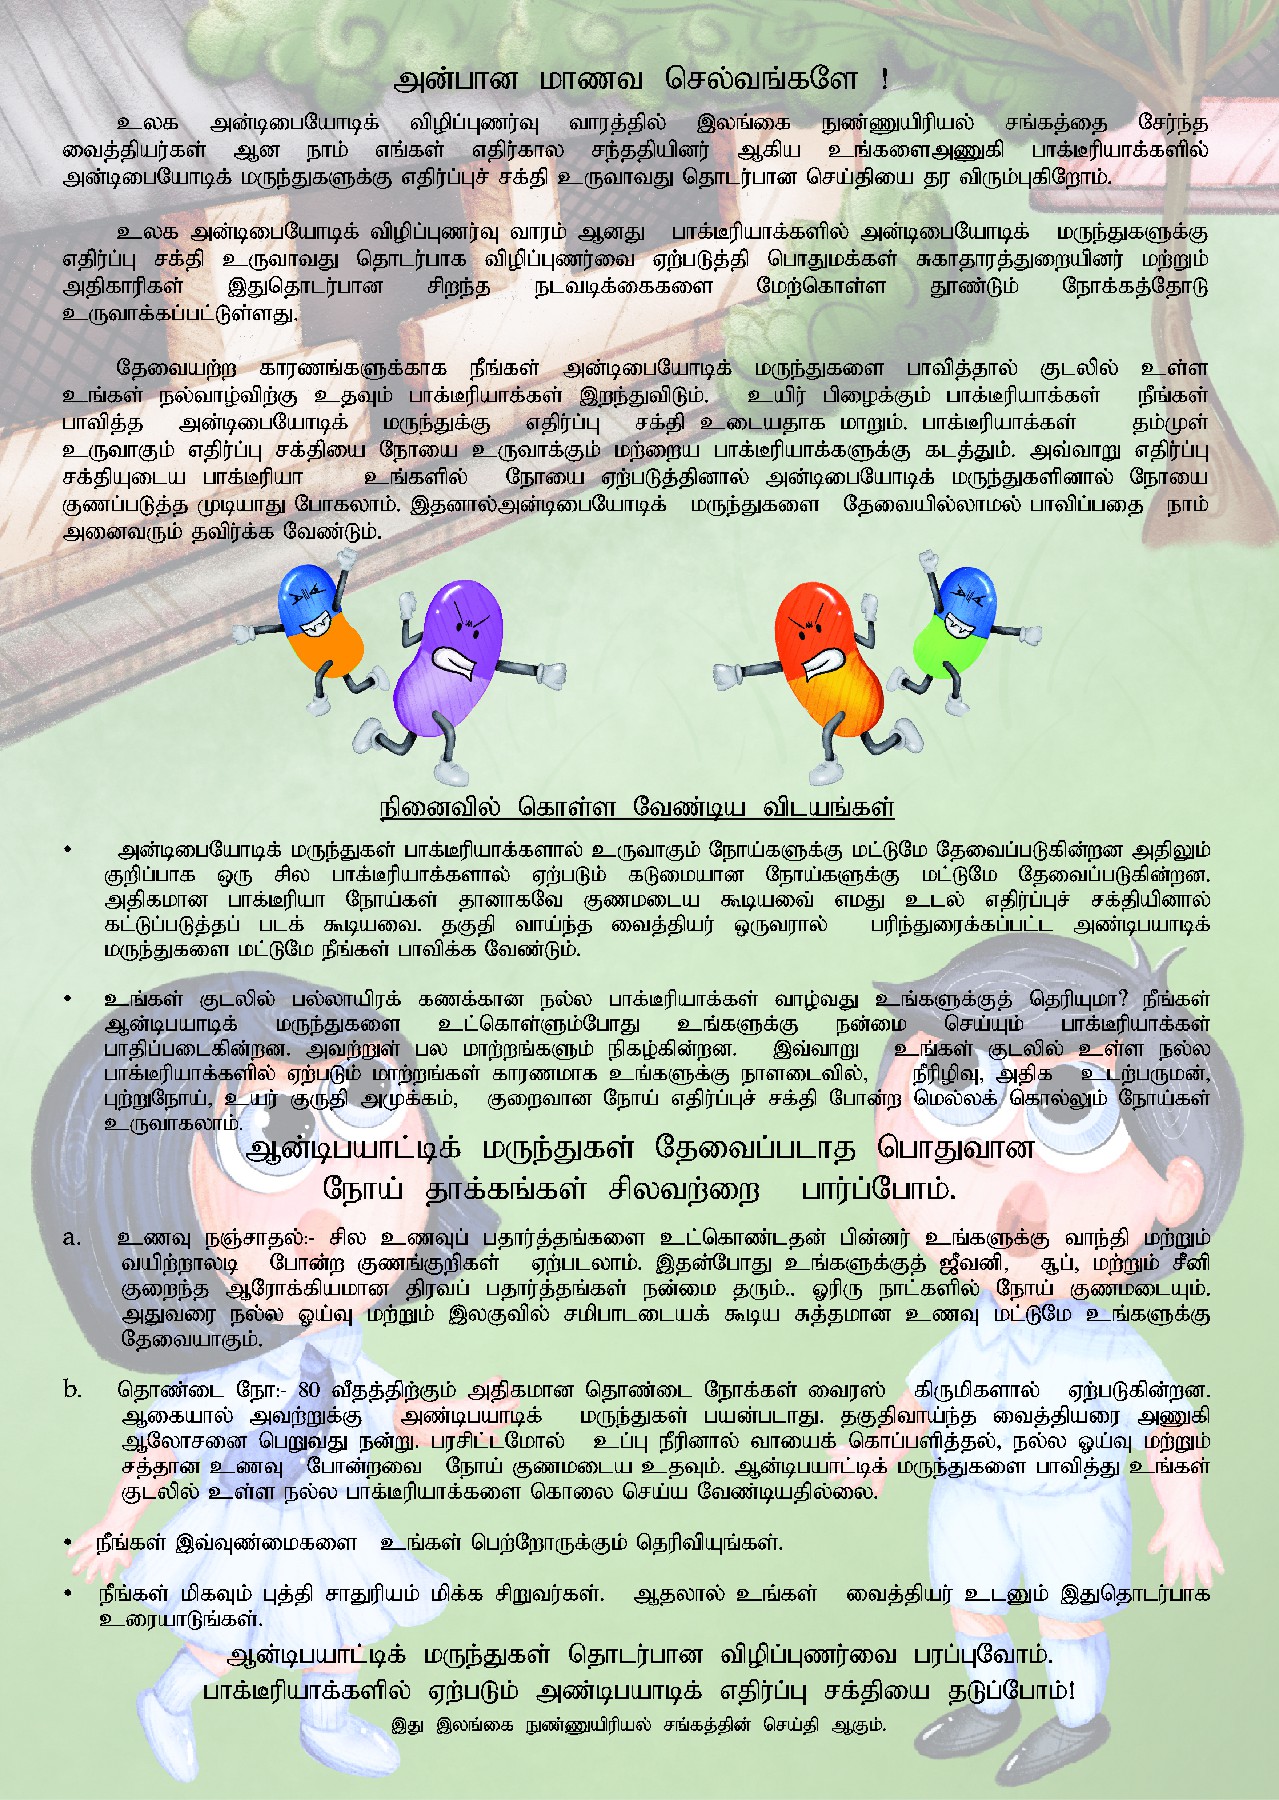 Tamil poster to school children